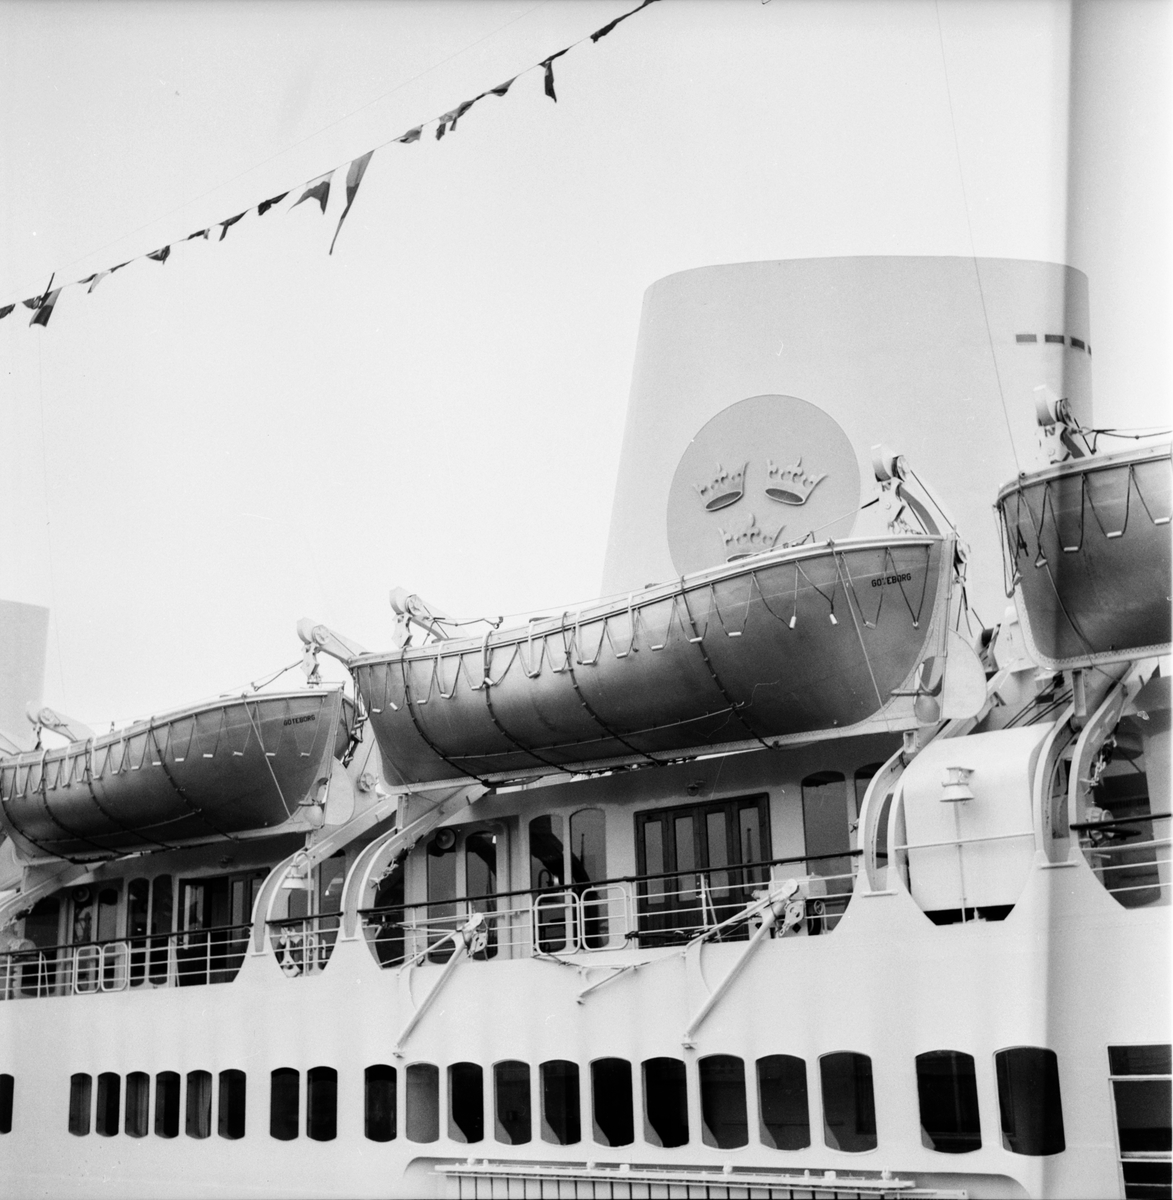 Göteborg. Lion-konferans (båten Gripsholm)
1957